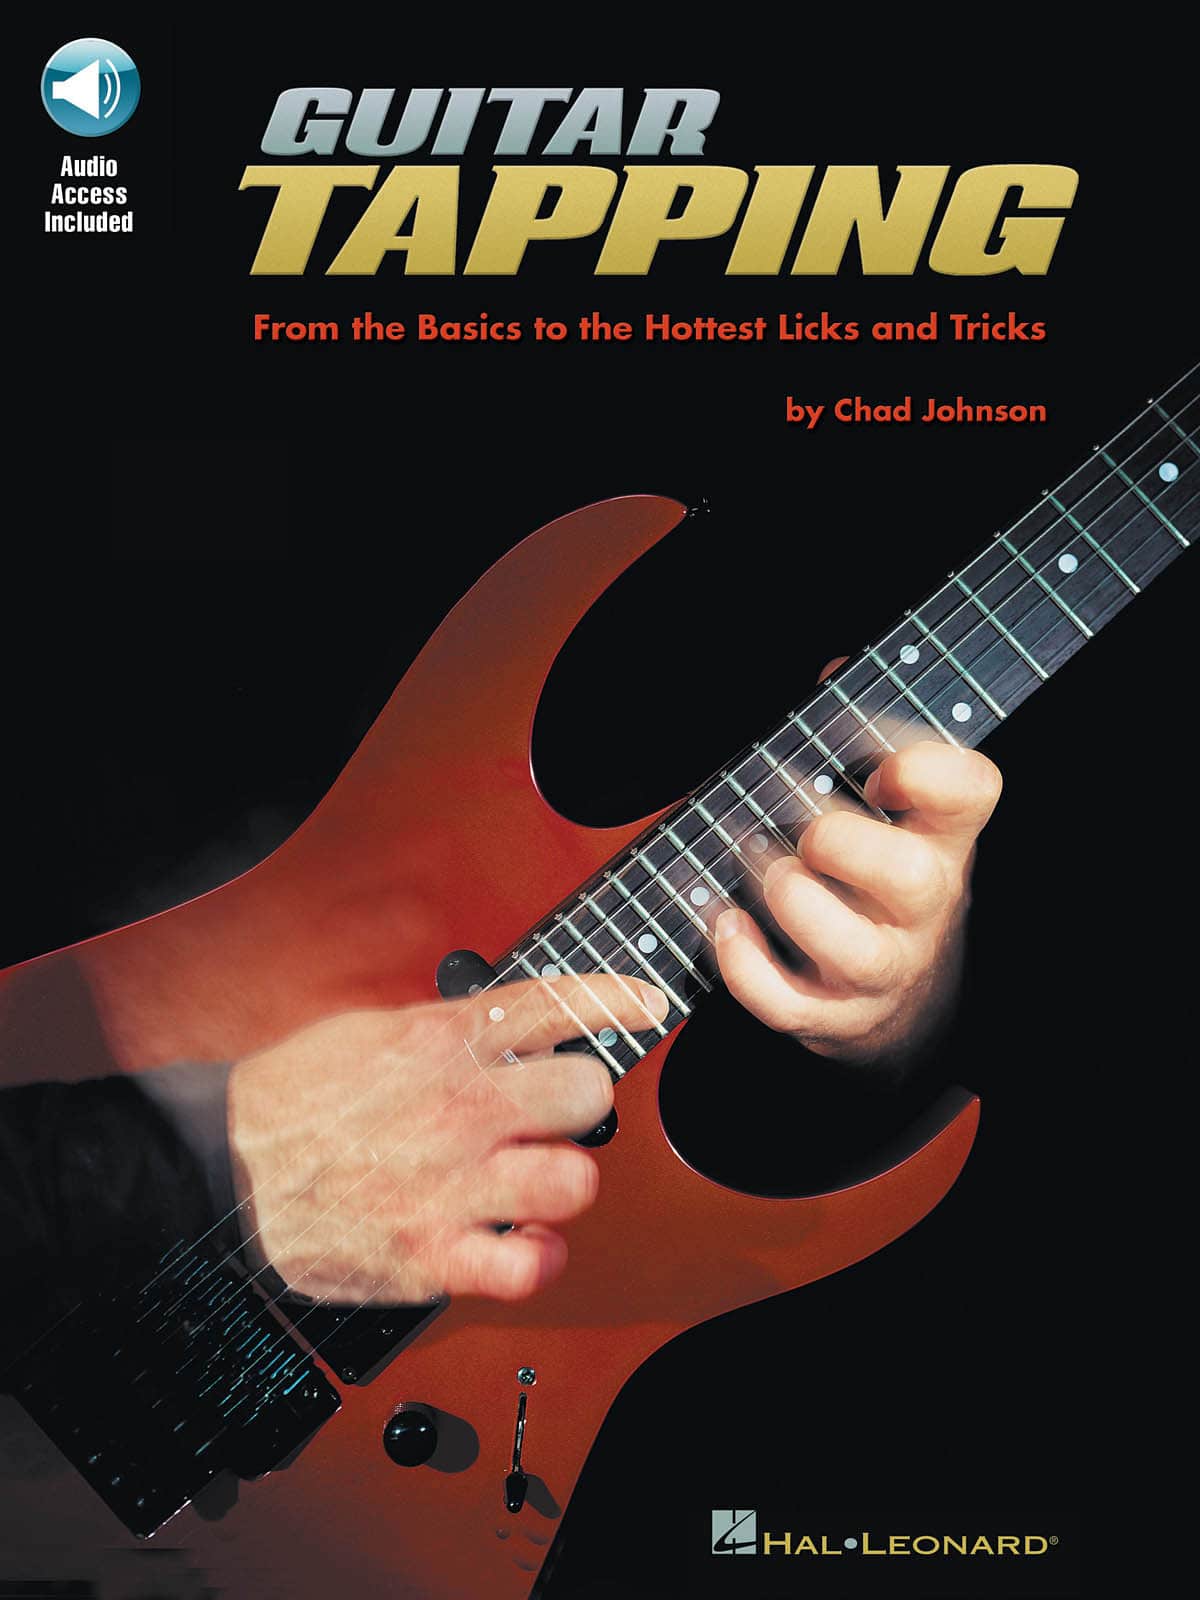 HAL LEONARD CHAD JOHNSON GUITAR TAPPING + AUDIO TRACKS - GUITAR TAB